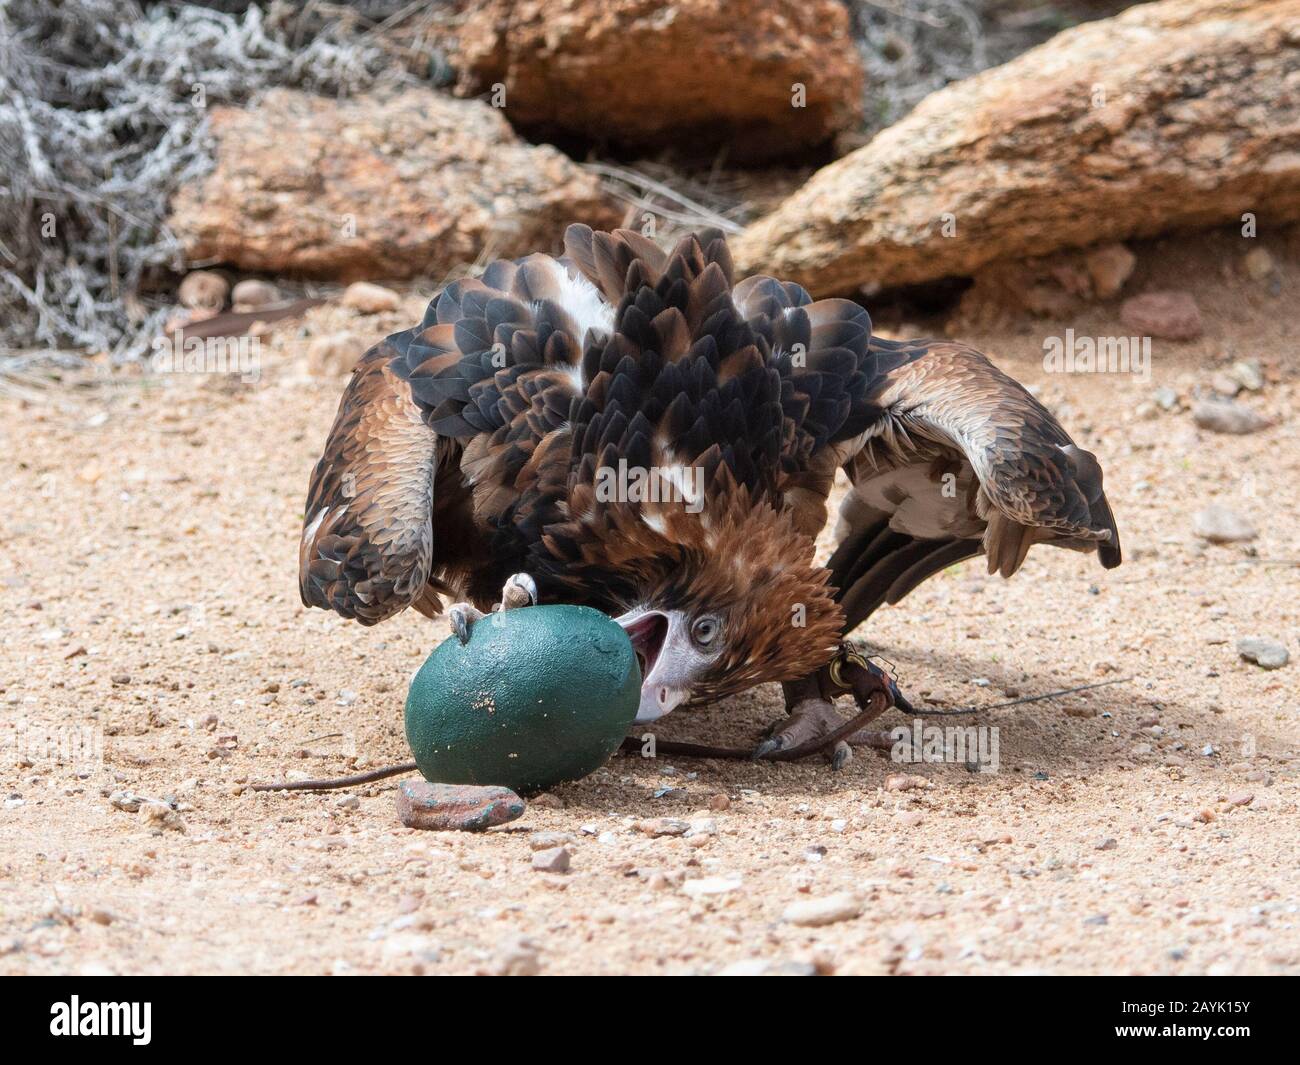 A Black-breasted Buzzard (Hamirostra melanosternon) breaking open a fake emu egg during a bird display in Australia Stock Photo